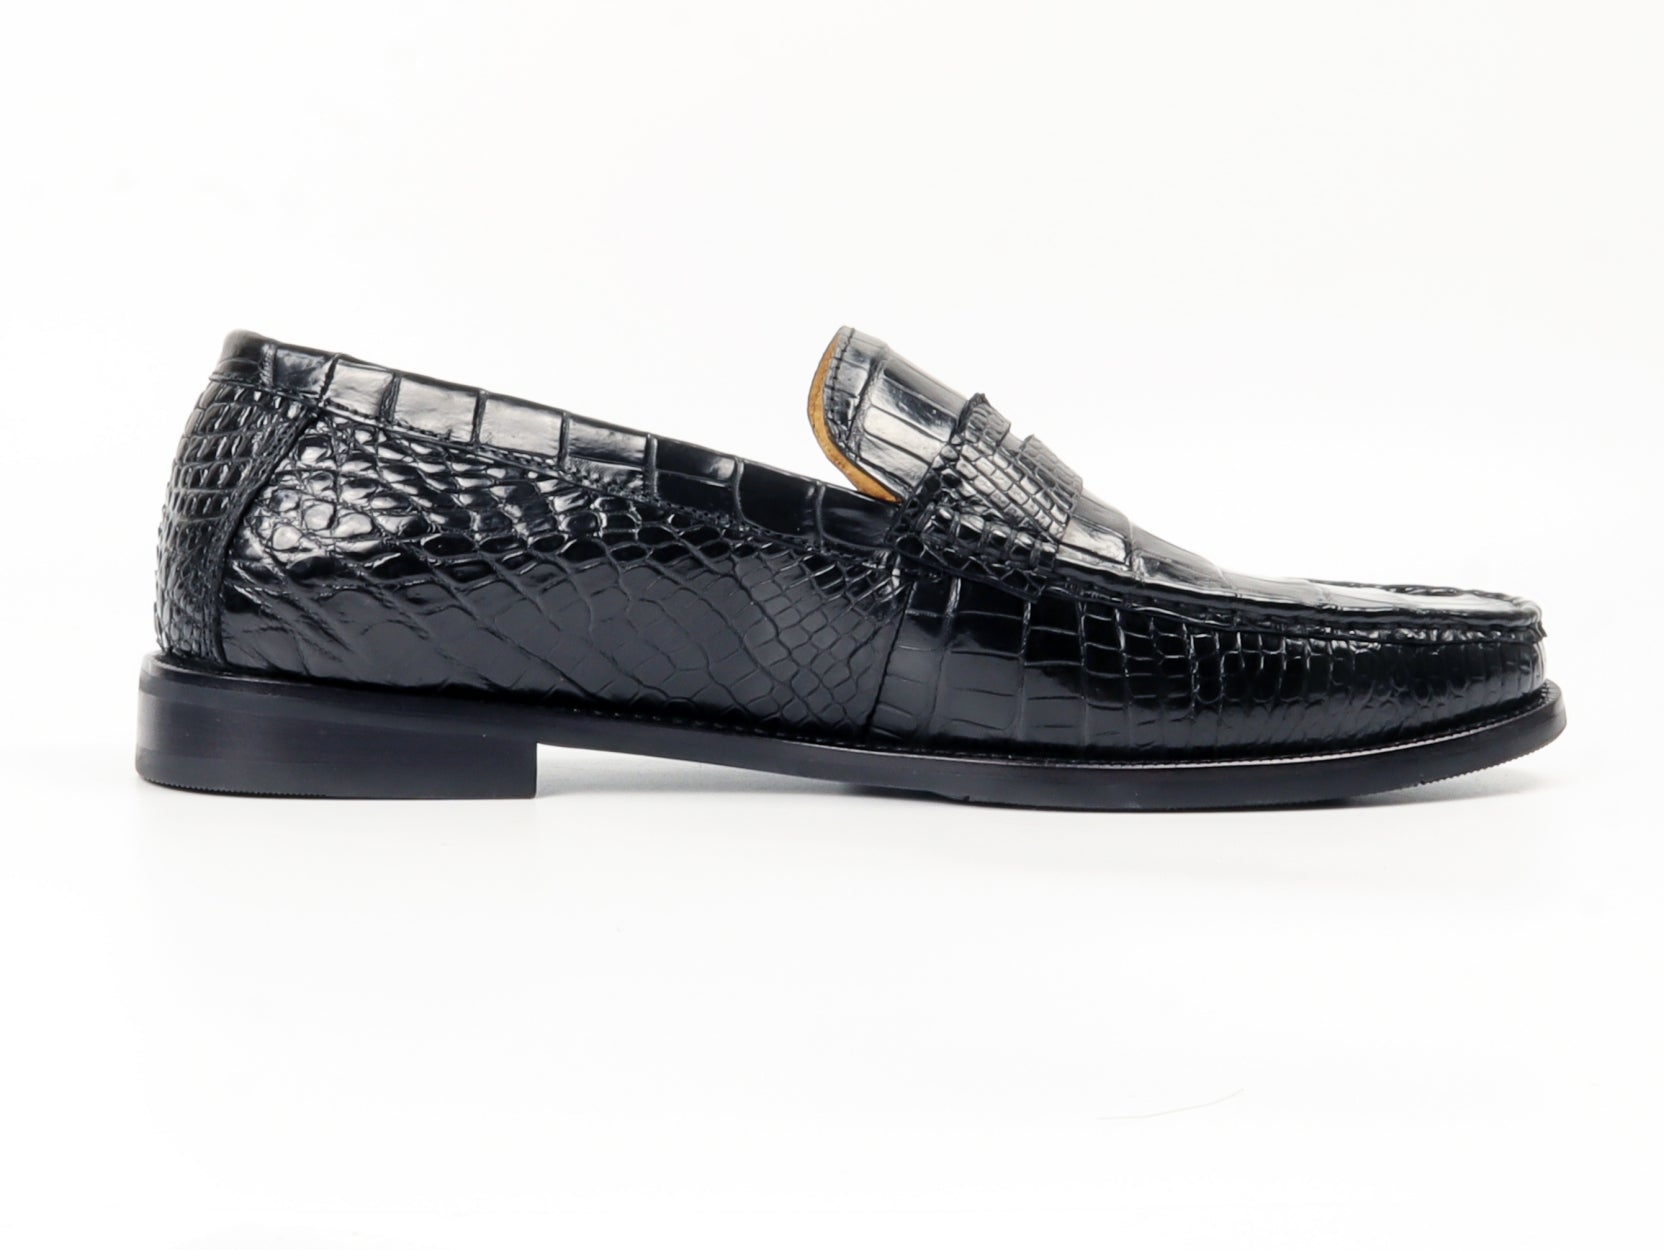 Sanpijiang New Crocodile Skin Men Crocodile Shoes High-grade